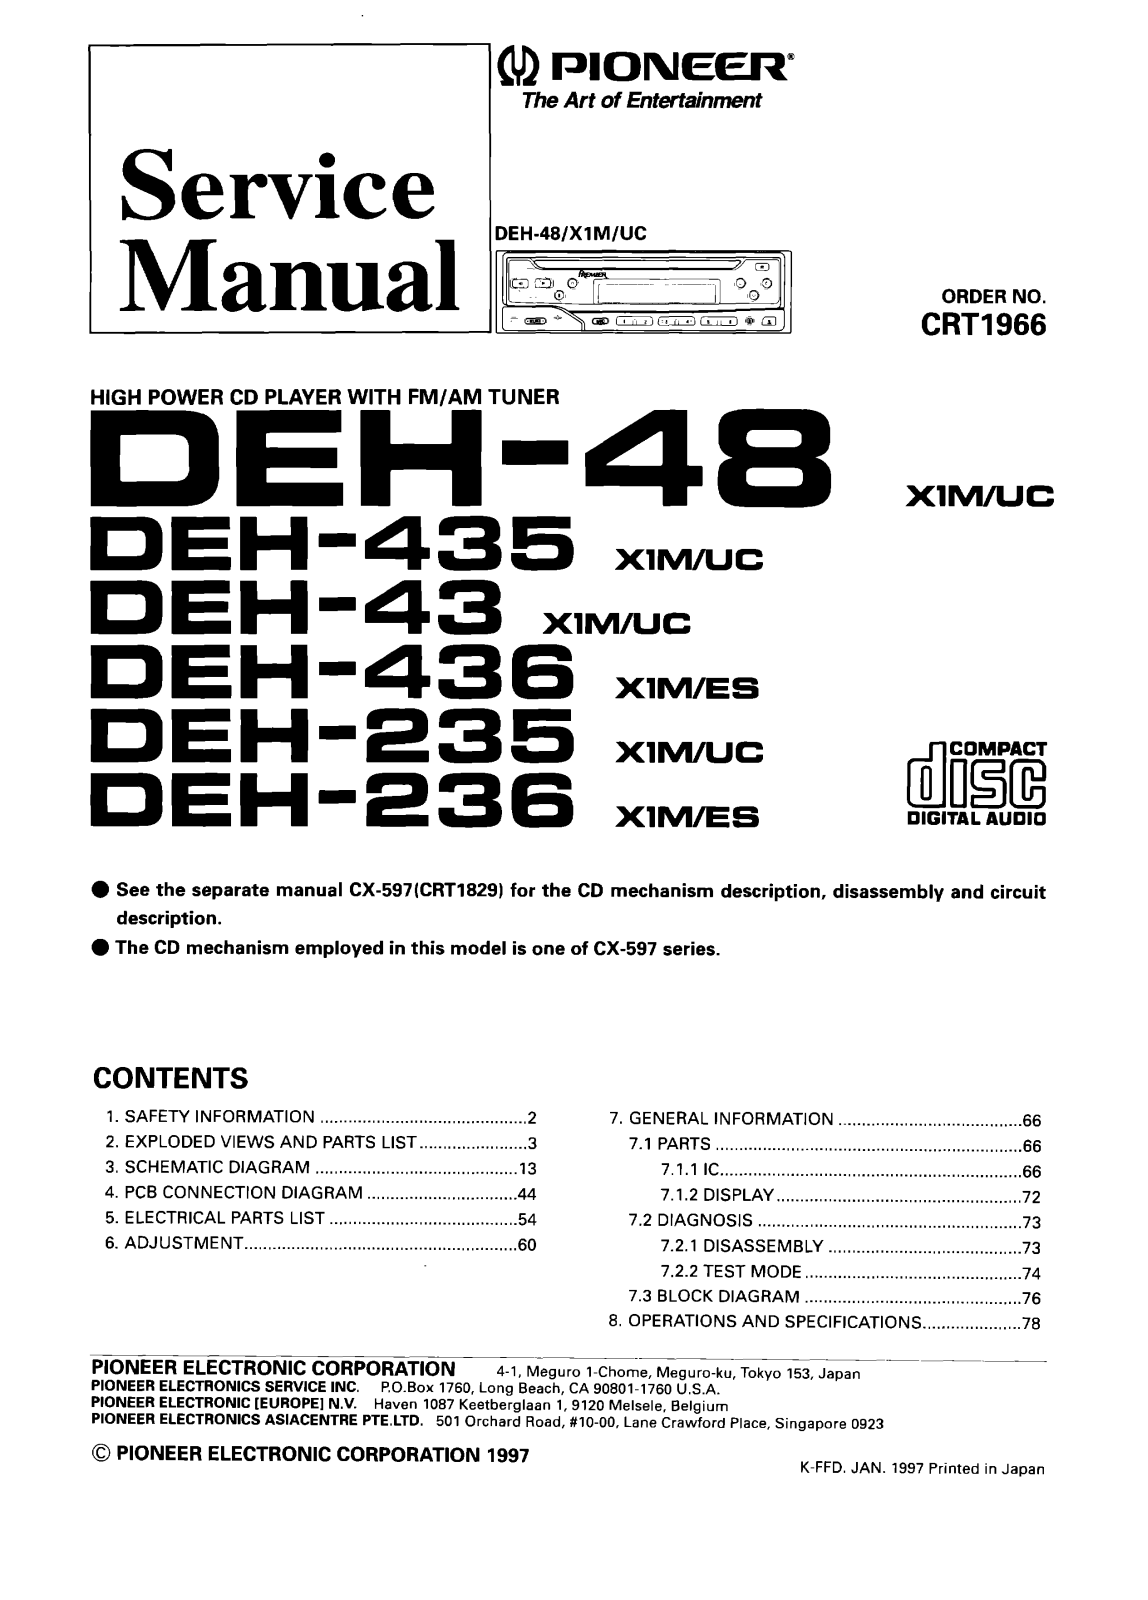 PIONEER DEH 435, DEH 43, DEH 436, DEH 235, DEH 236 Service Manual